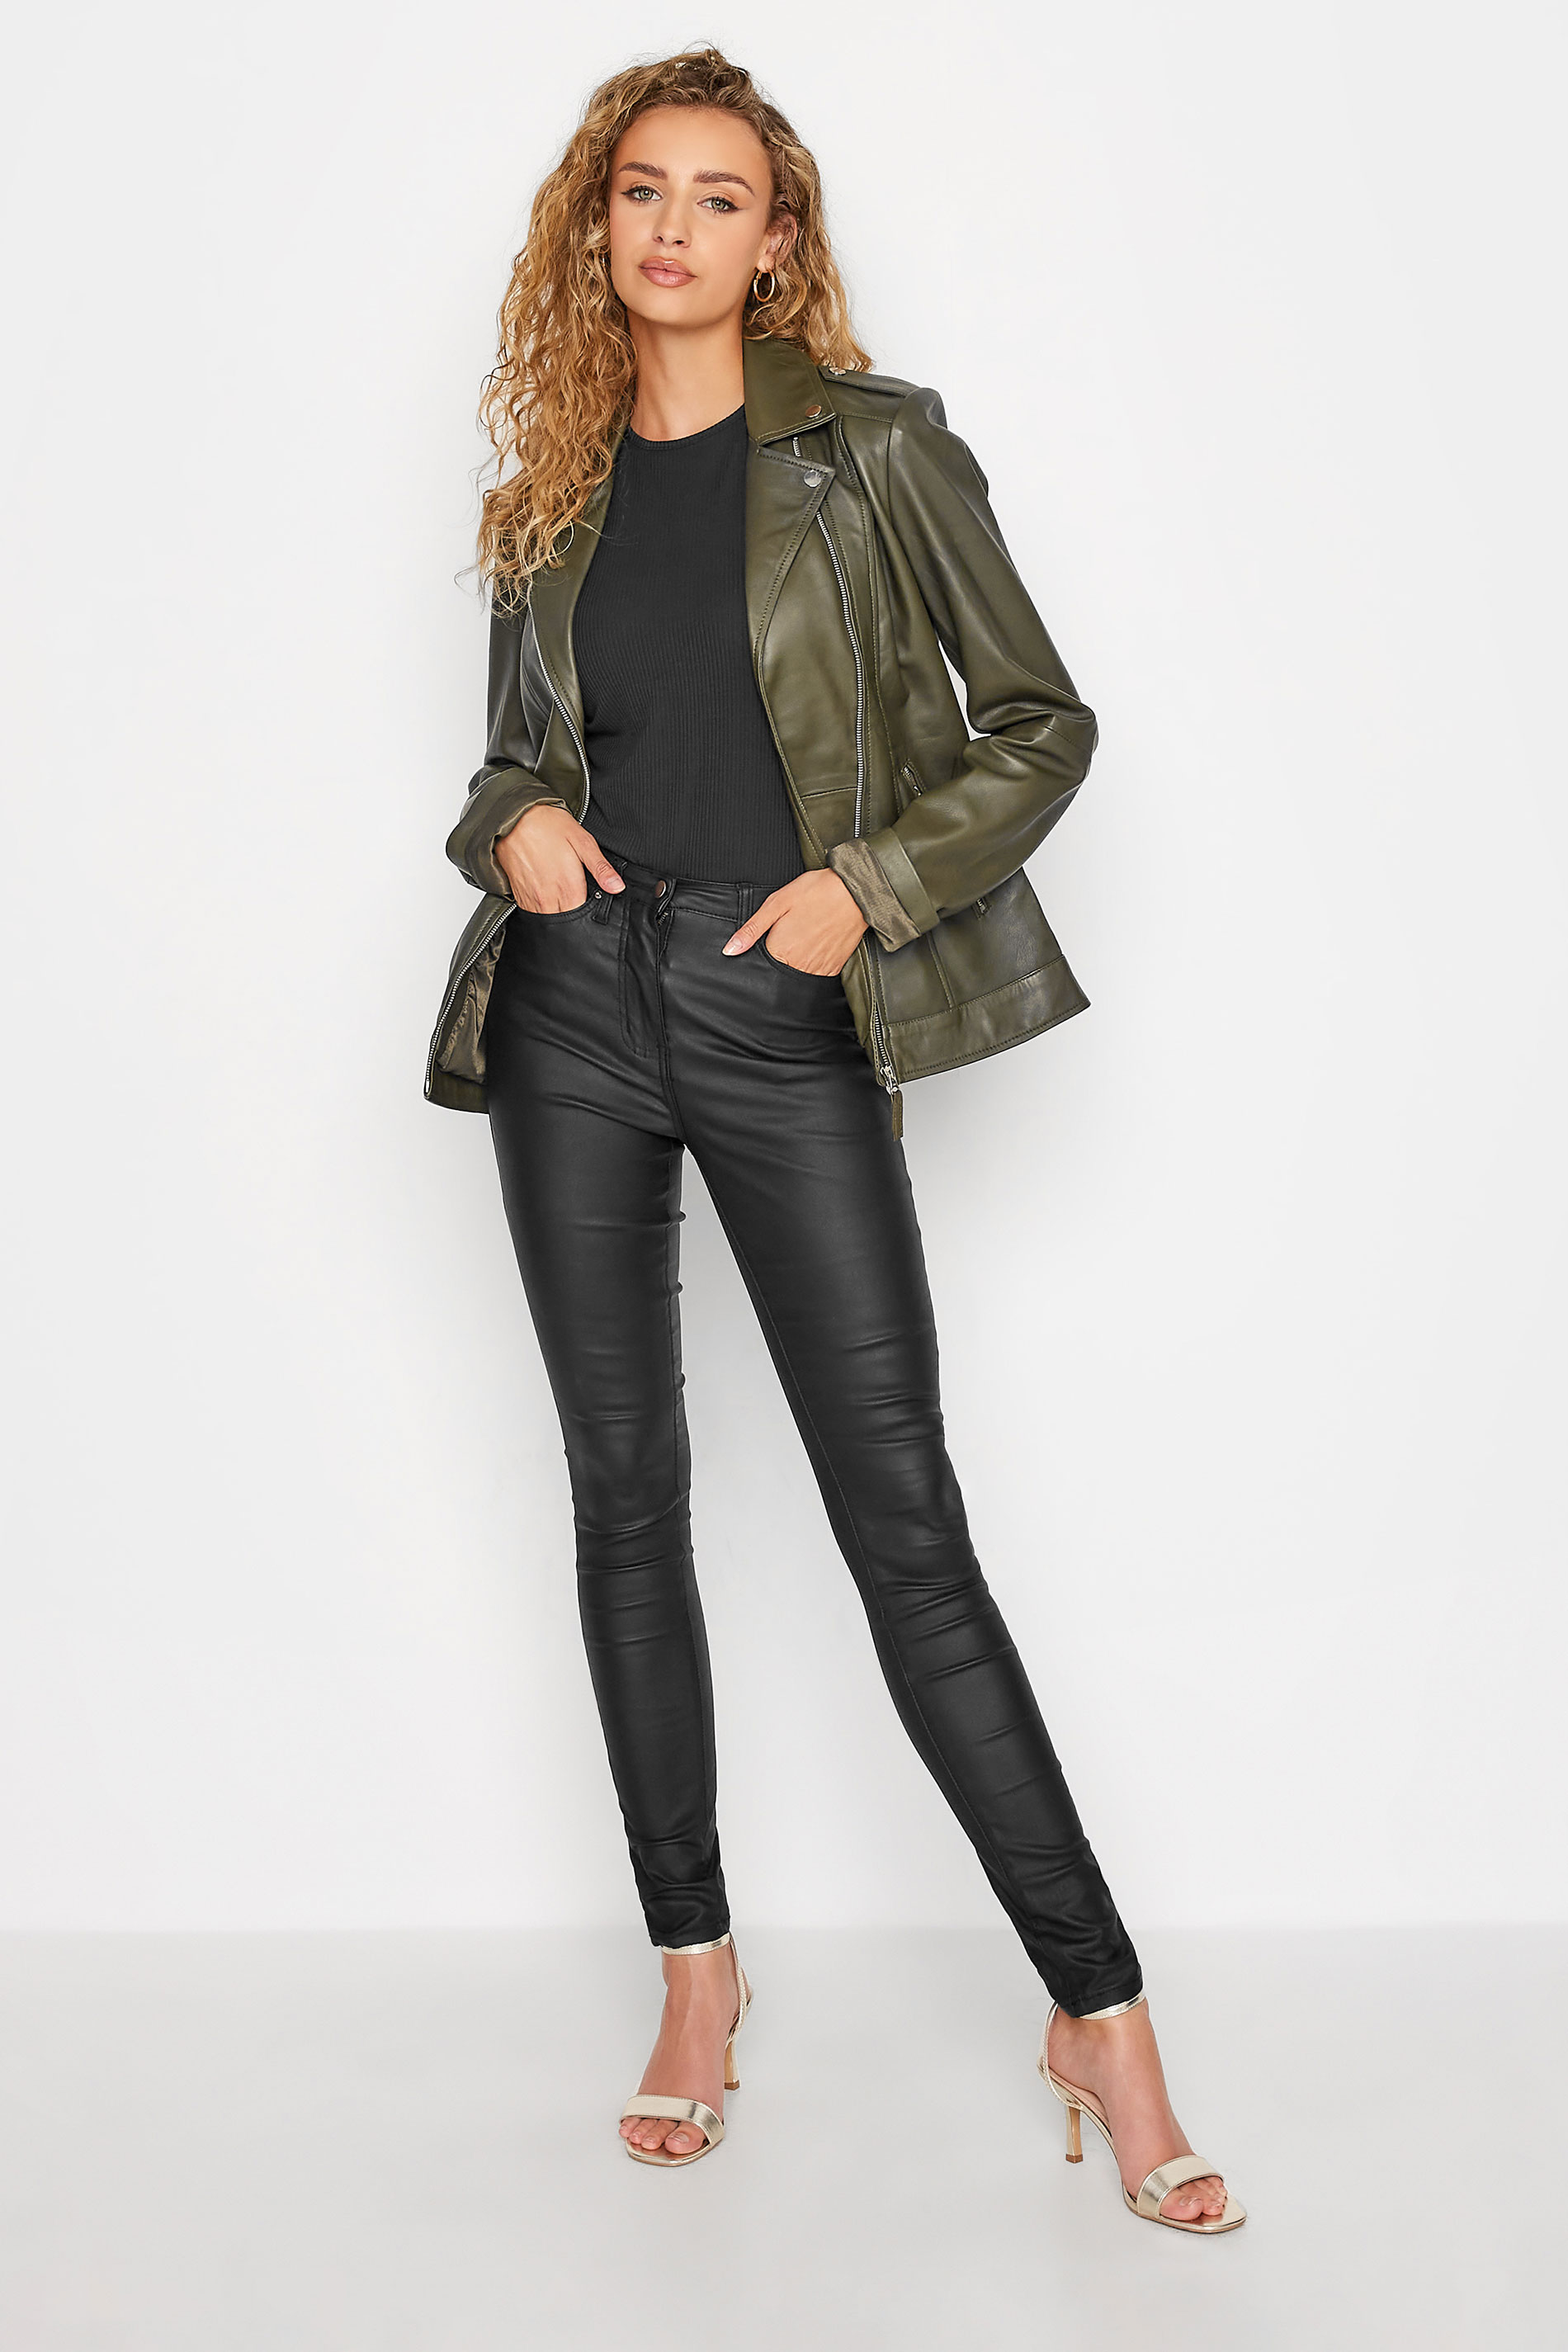 LTS Tall Women's Khaki Green Leather Biker Jacket | Long Tall Sally